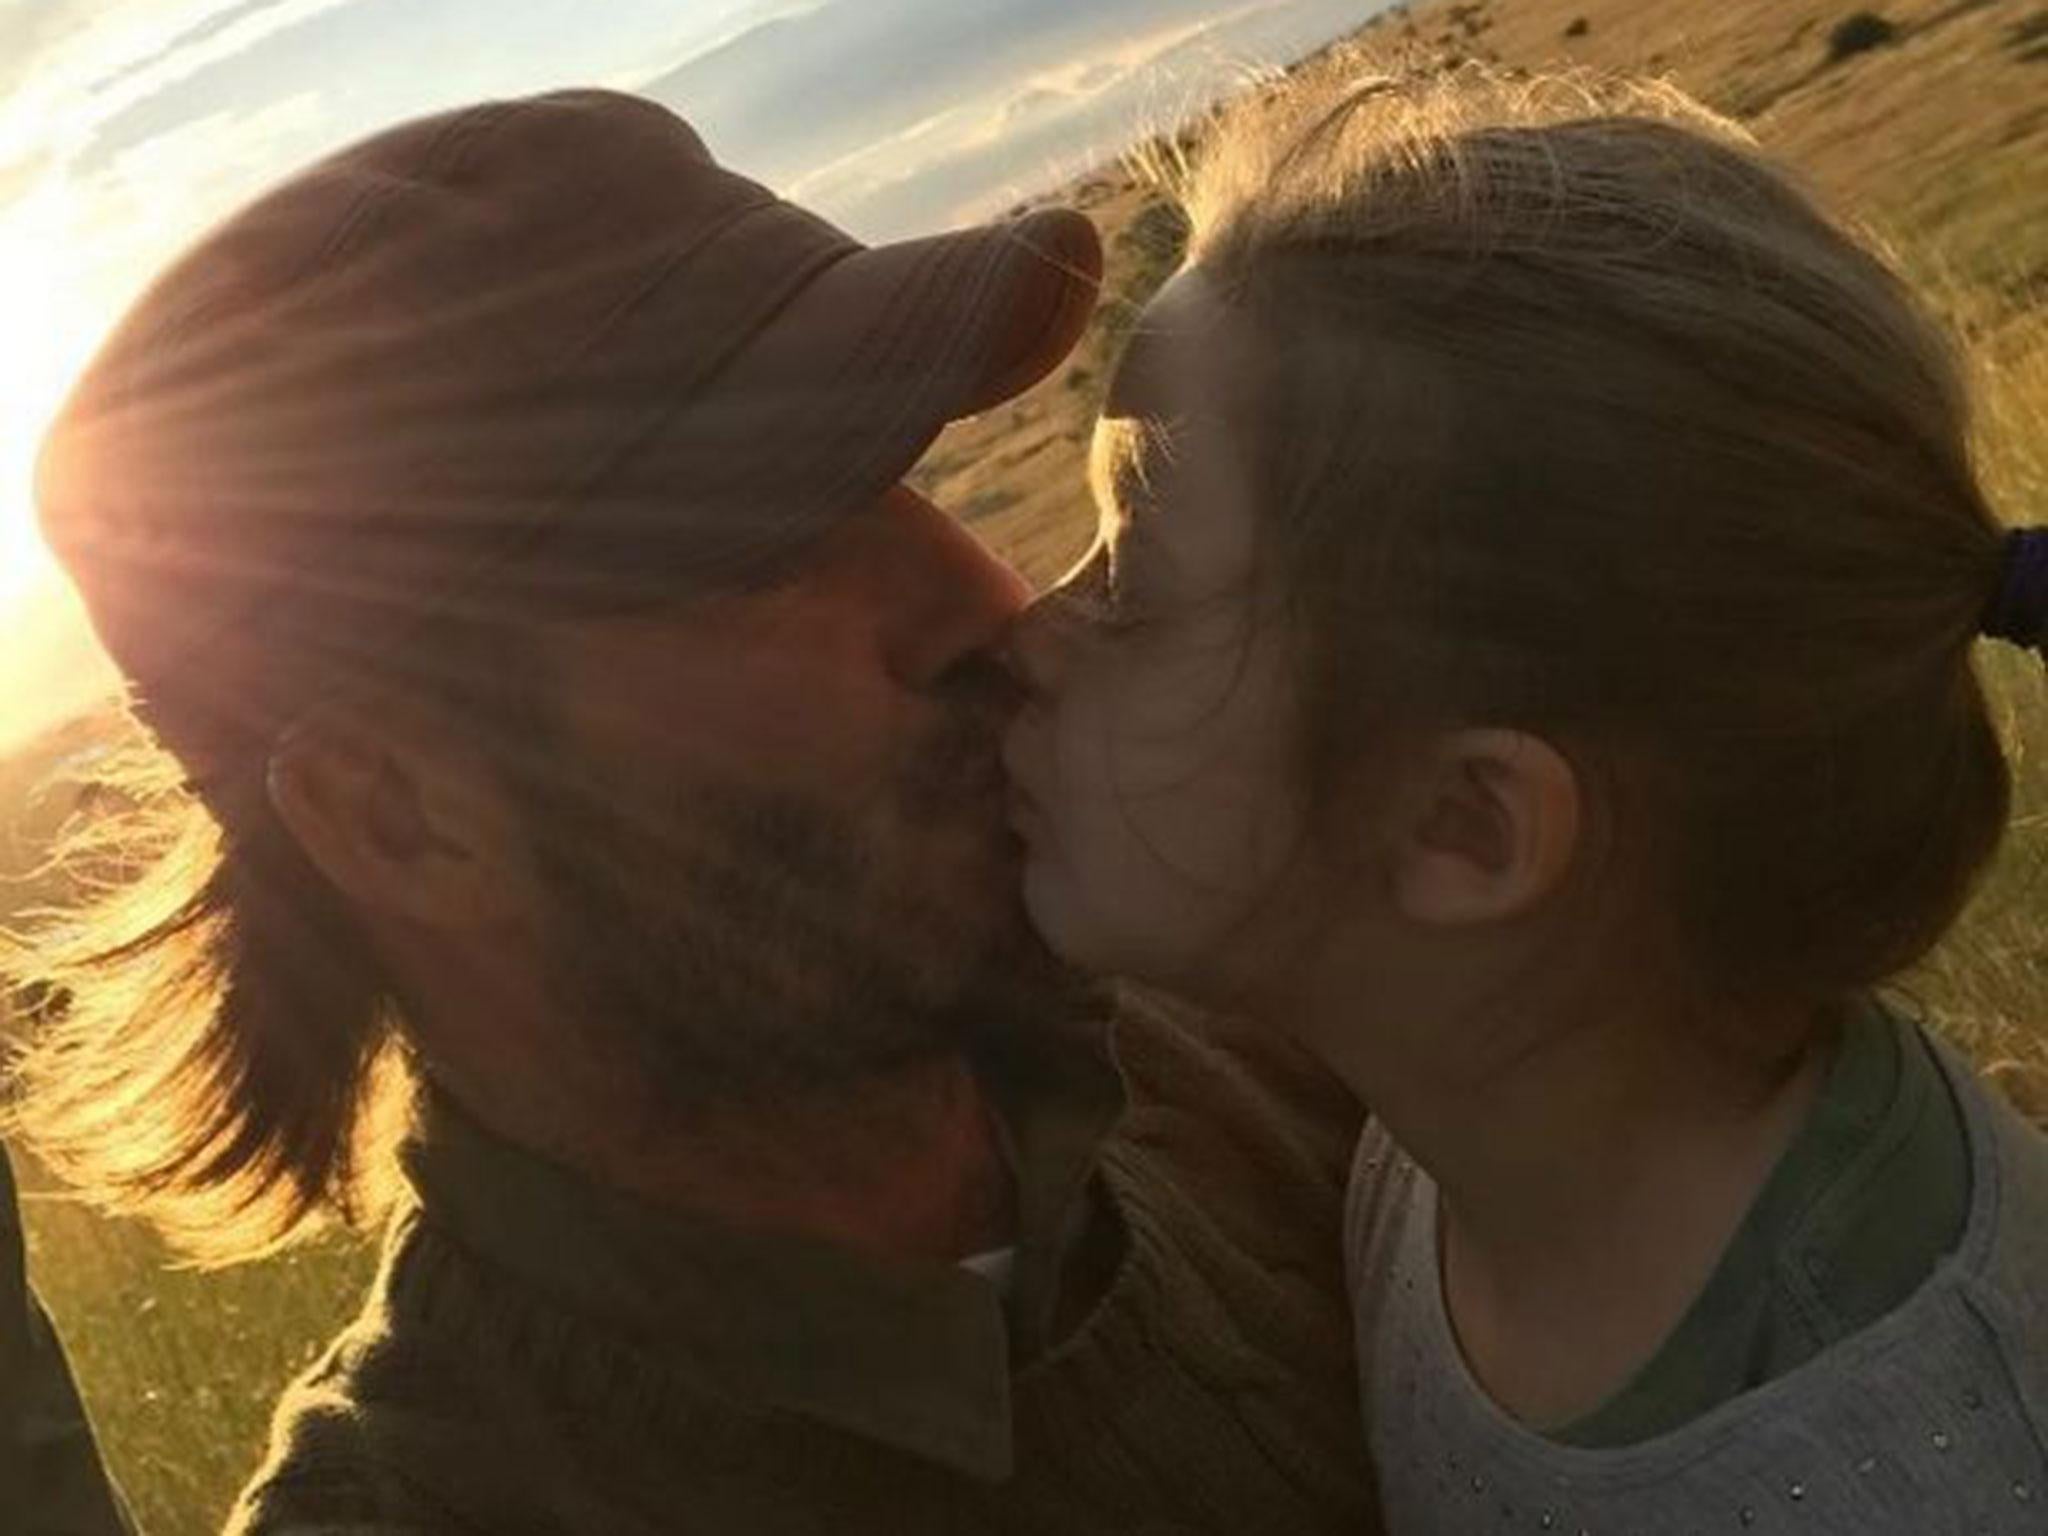 David Beckham shared the family holiday photo on Instagram